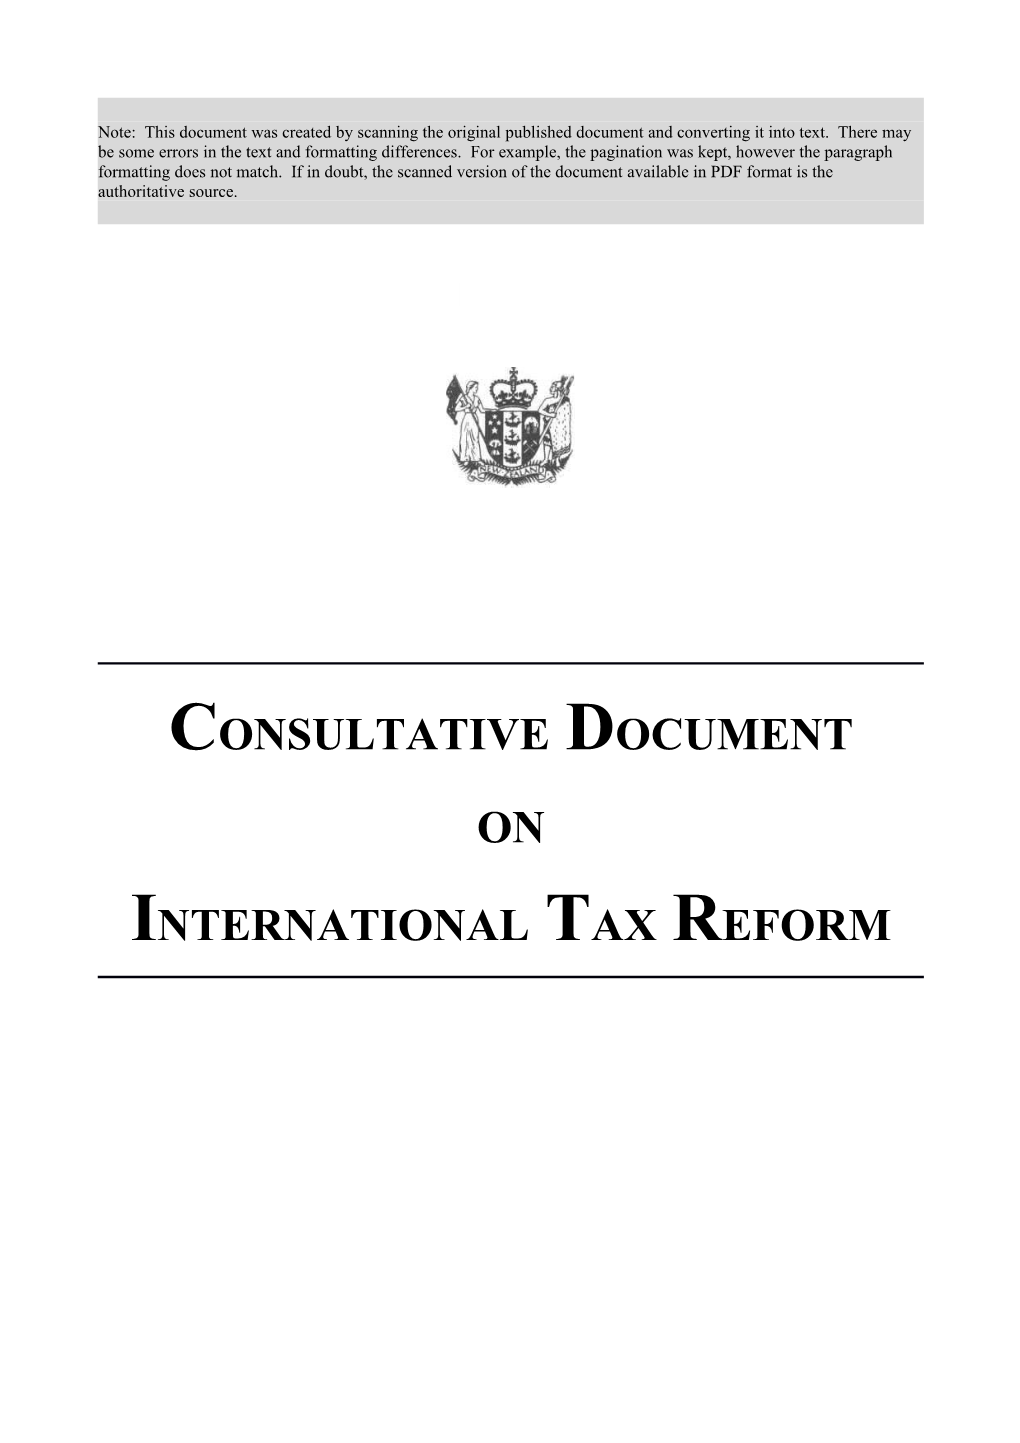 Consultative Document on International Tax Reform (December 1987)